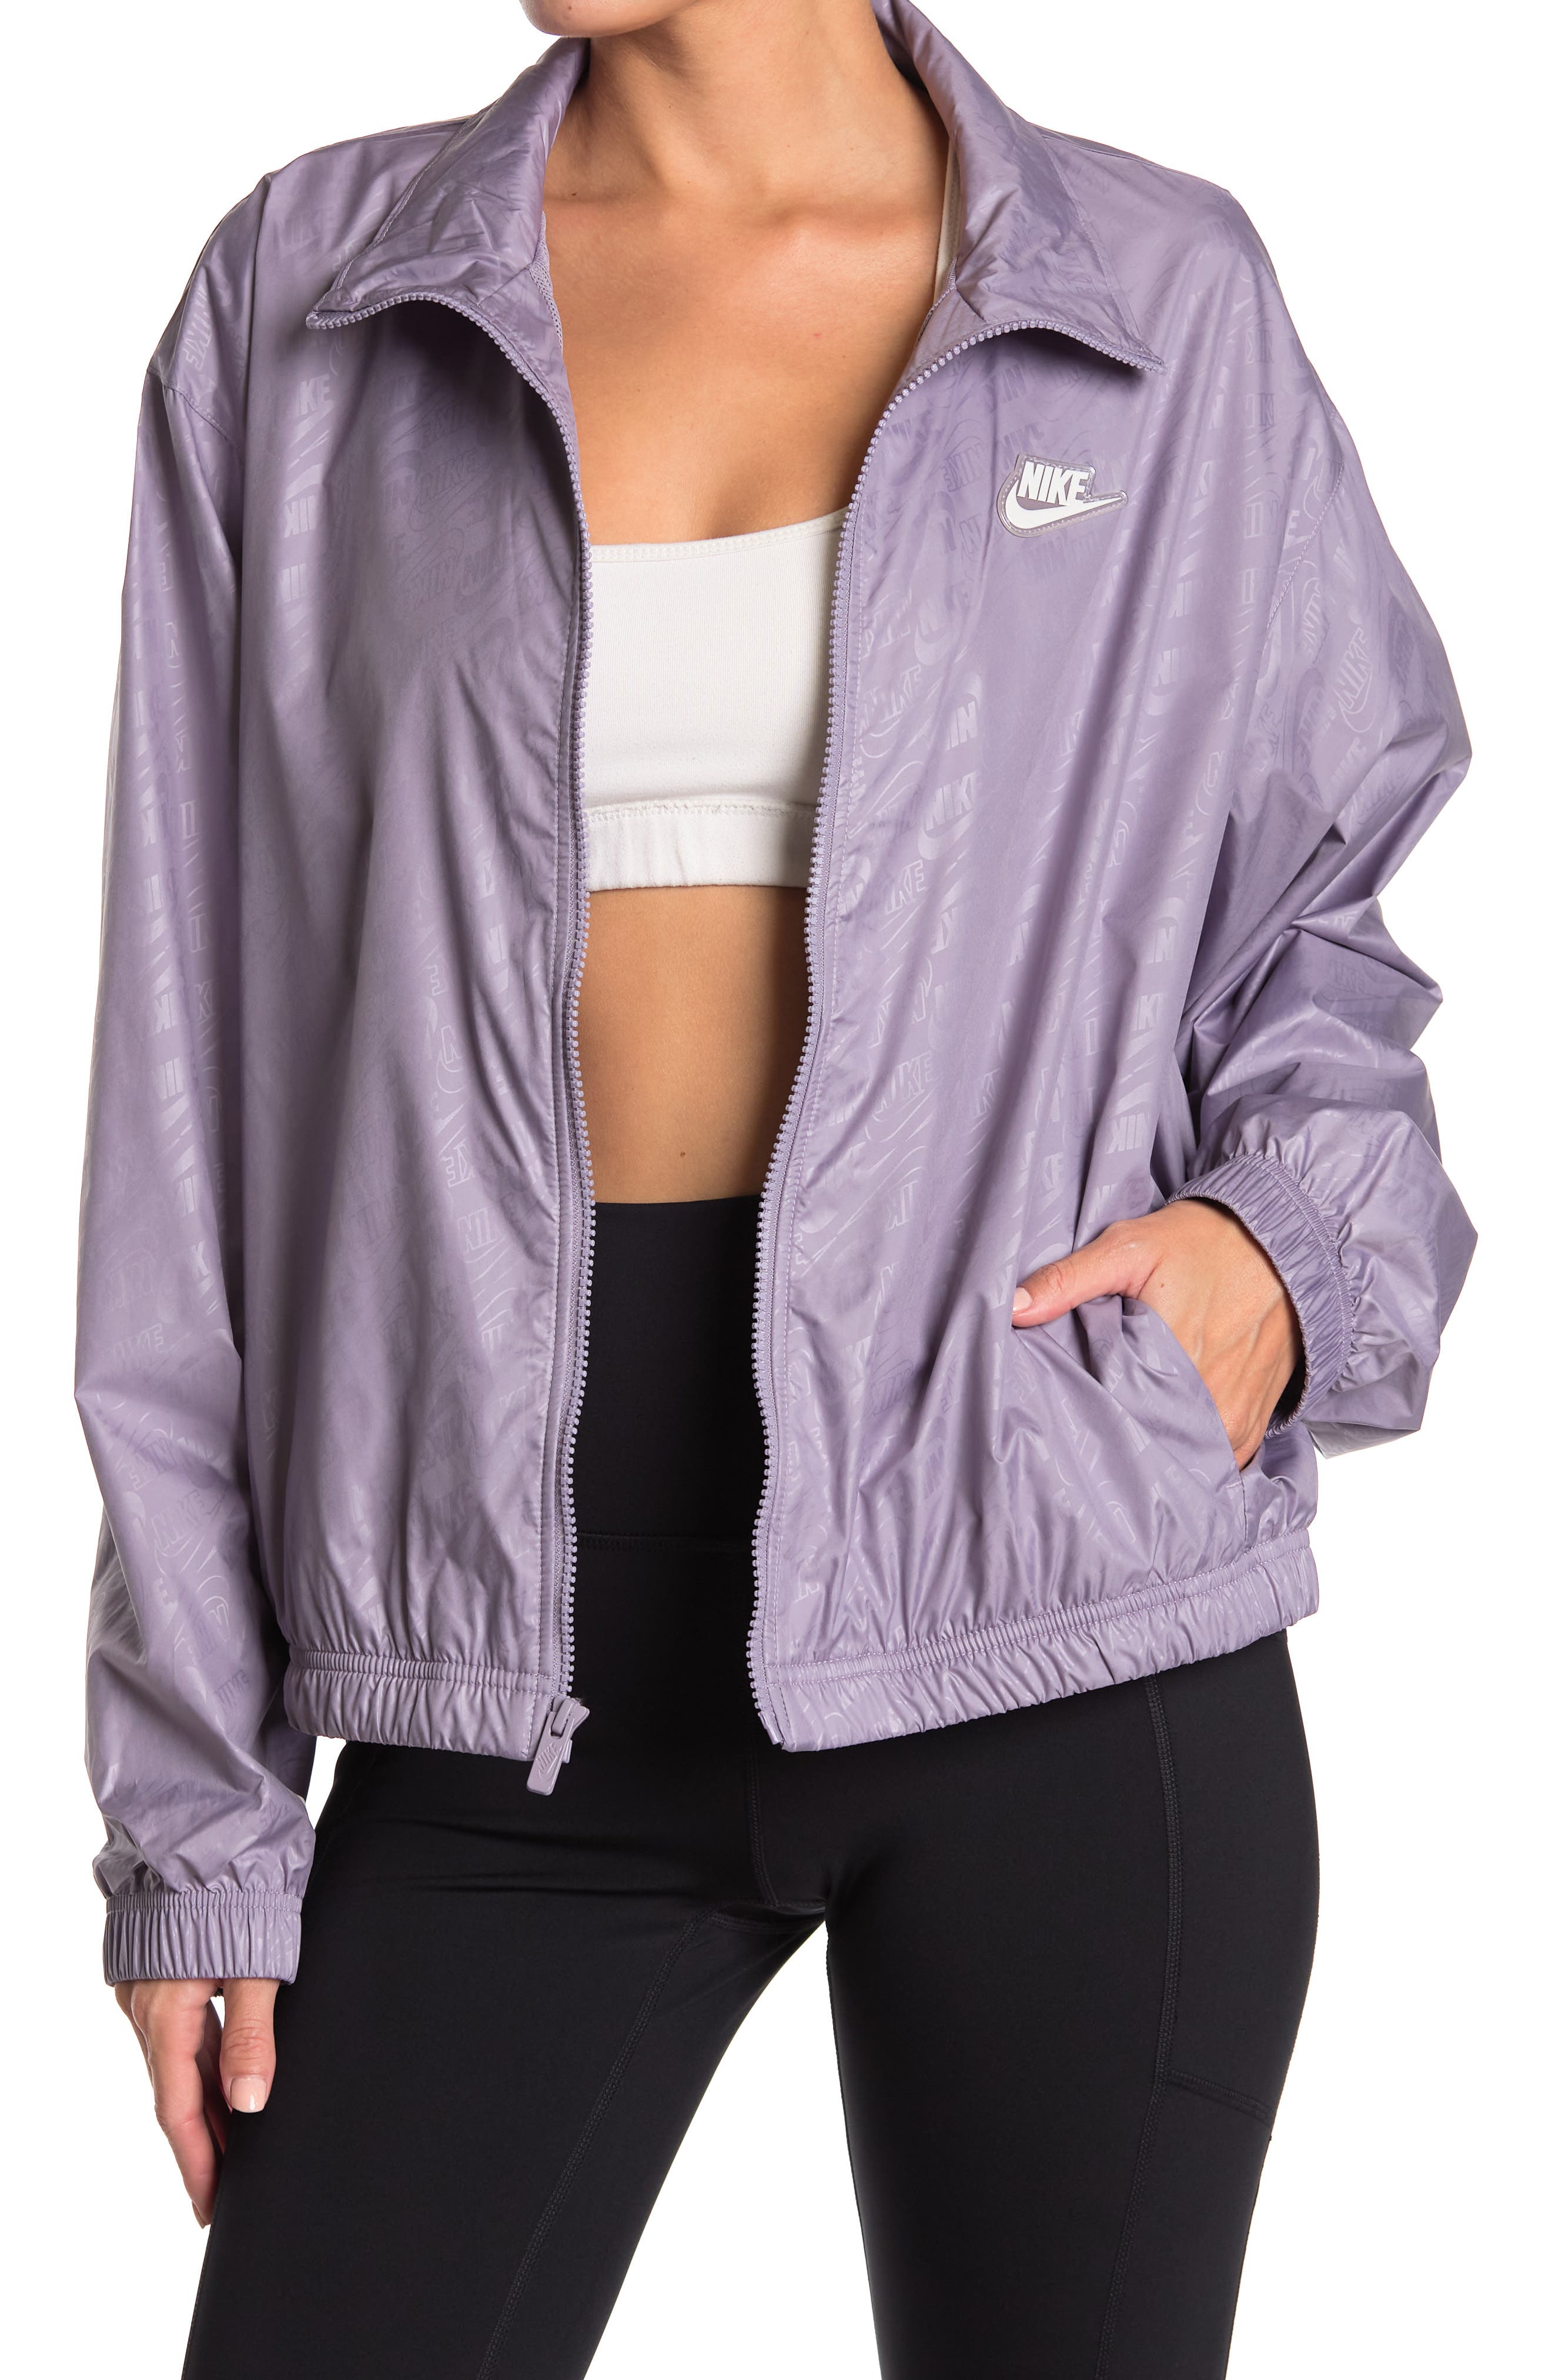 purple activewear jacket